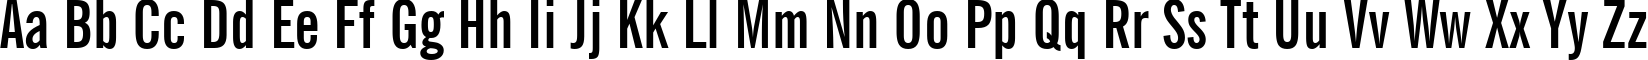 Пример написания английского алфавита шрифтом News Gothic Bold Extra Condensed BT